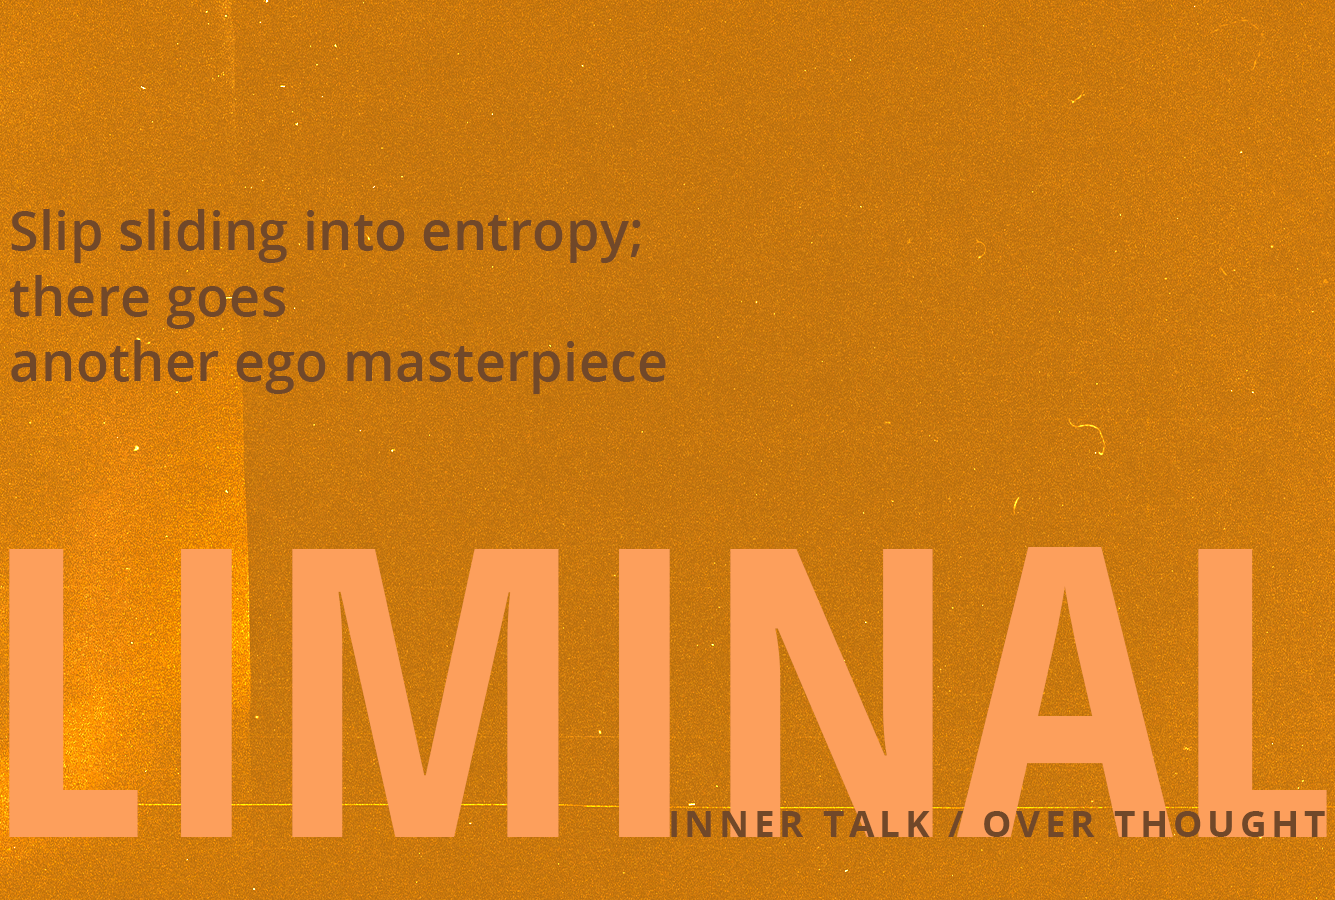 Song Spotlight: Liminal – Inner Talk/Over Thought